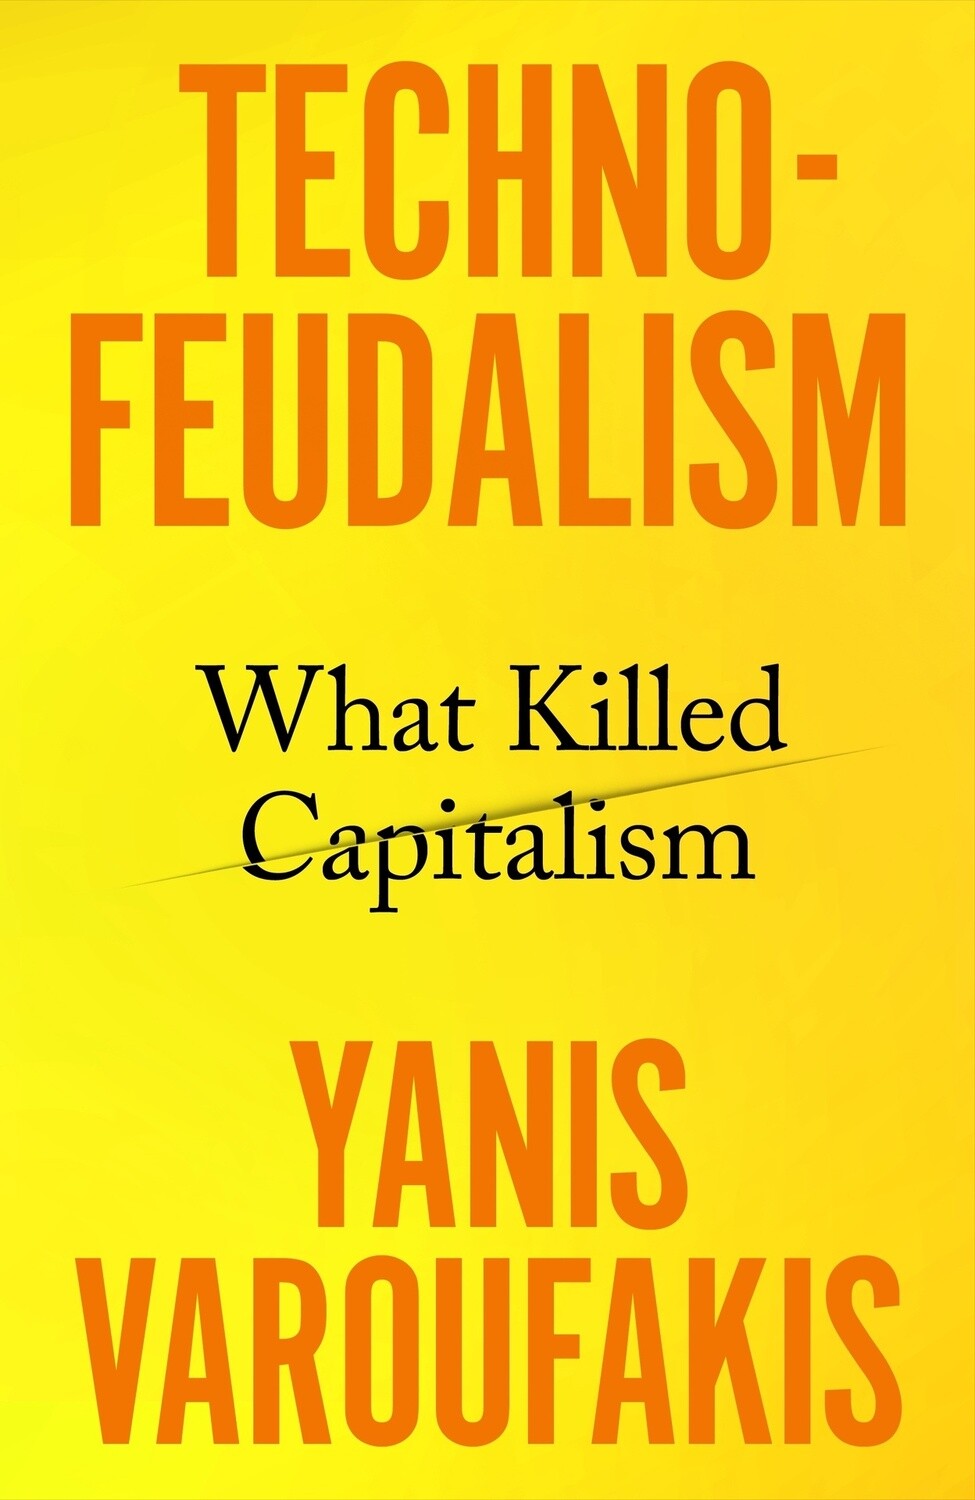 Technofeudalism: What Killed Capitalism by Yanis Varoufakis